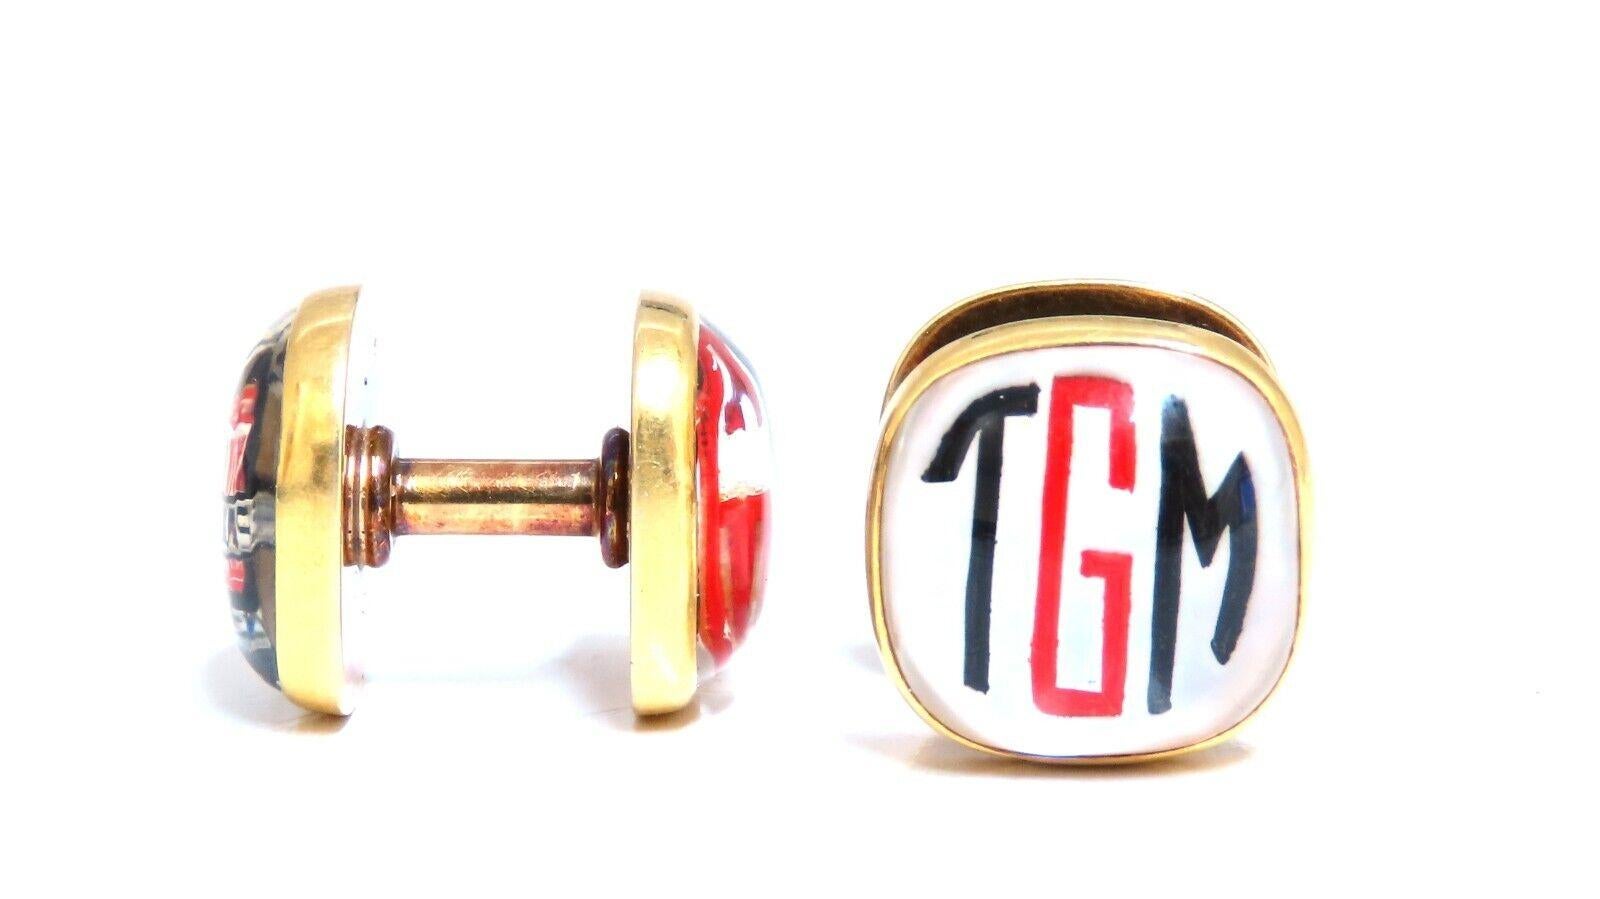 Memorabilia TGM Steel Republic cufflinks

14kt yellow gold

10.5 grams

13 x 15mm